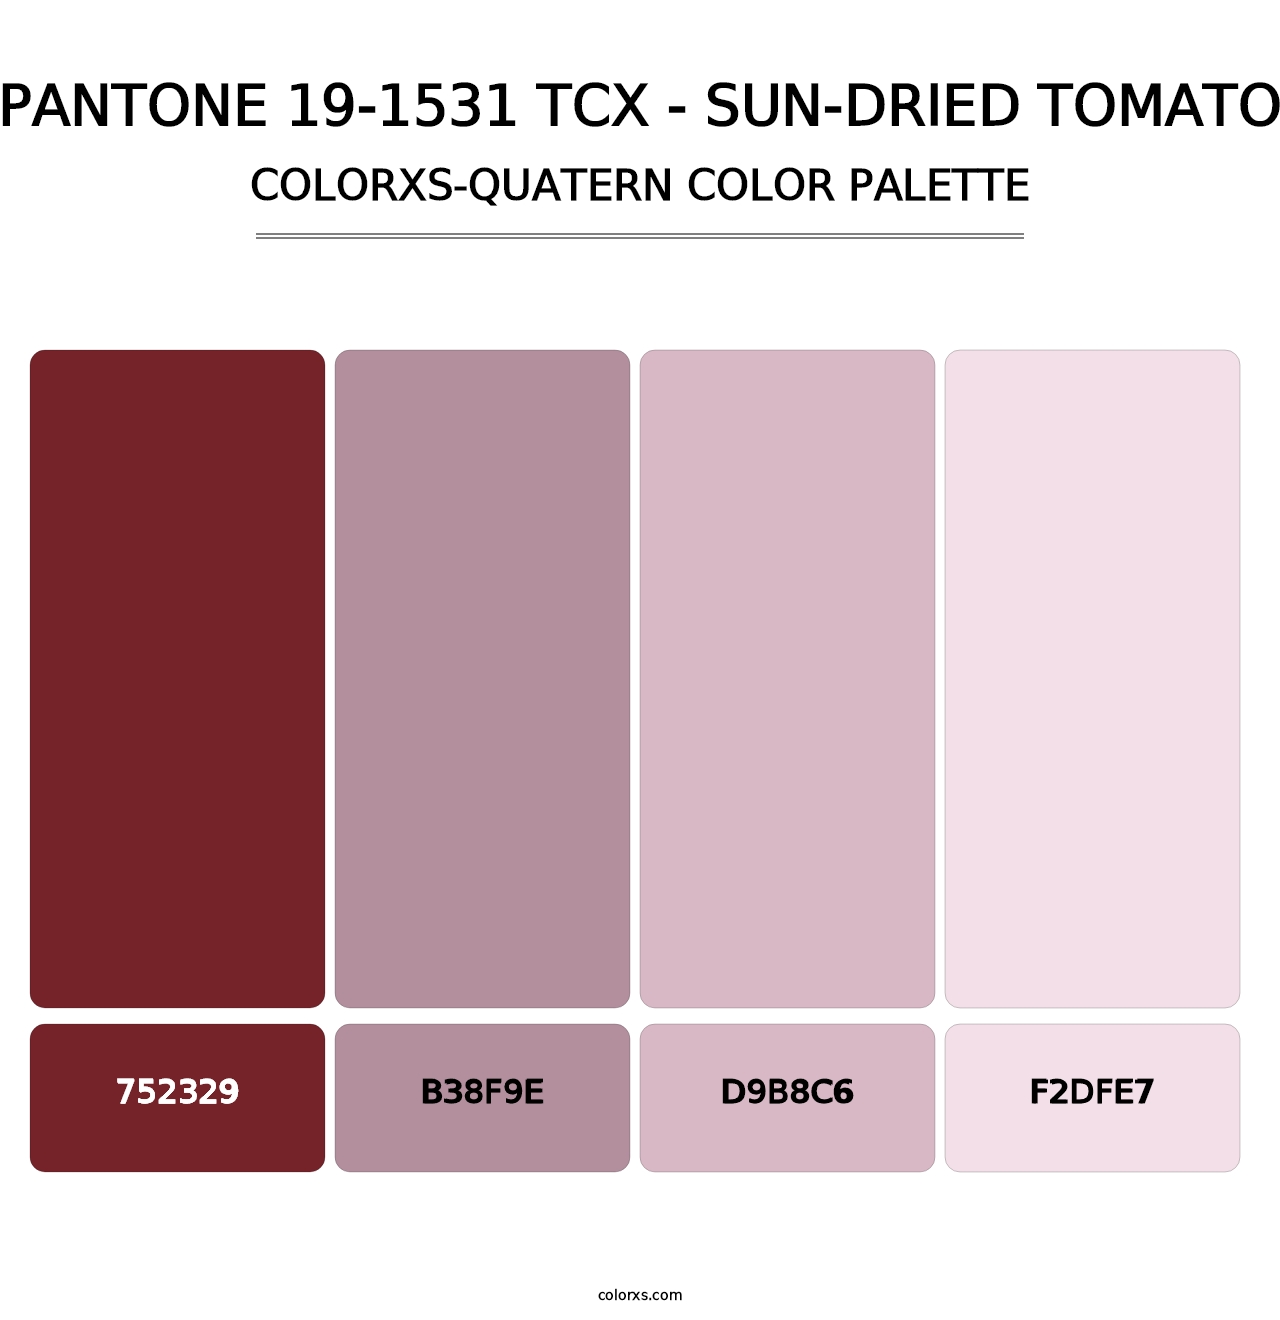 PANTONE 19-1531 TCX - Sun-Dried Tomato - Colorxs Quatern Palette